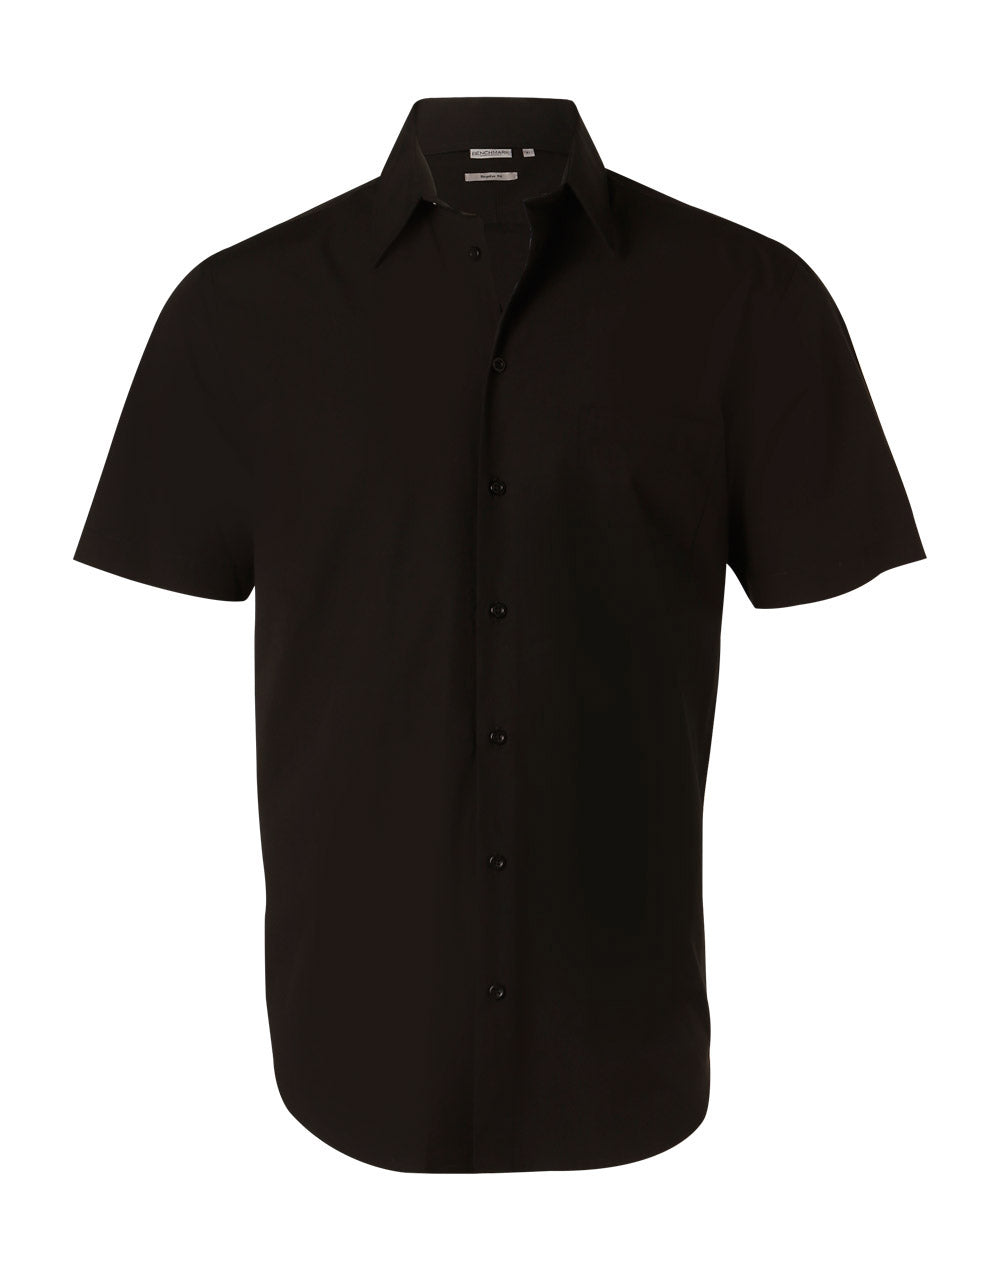 Winning Spirit Men's Cotton/Poly Stretch Short Sleeve Shirt (M7020S)